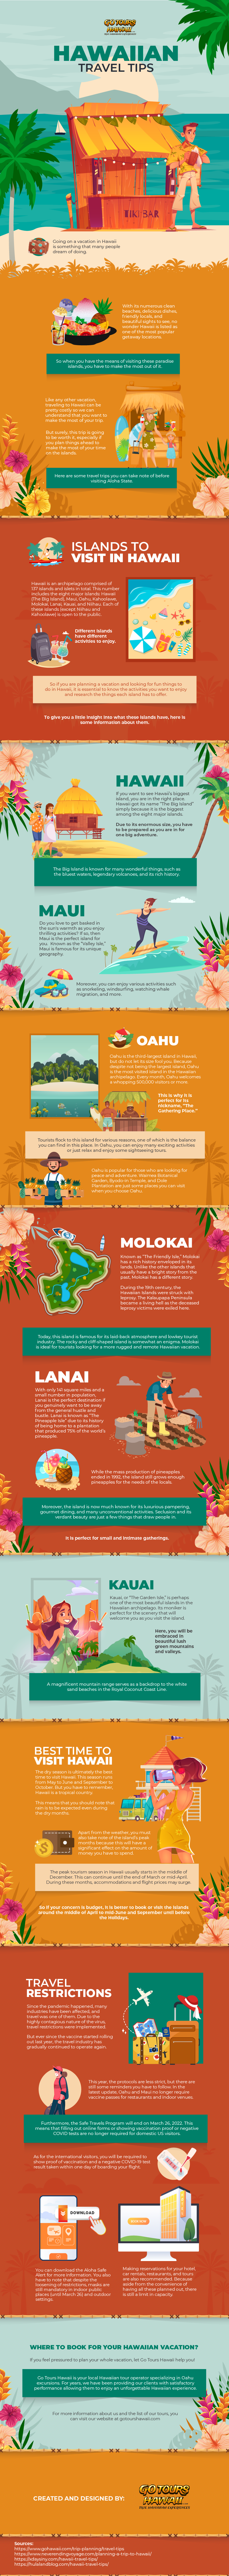 Hawaiian Travel Tips - Infographic Image87GRC